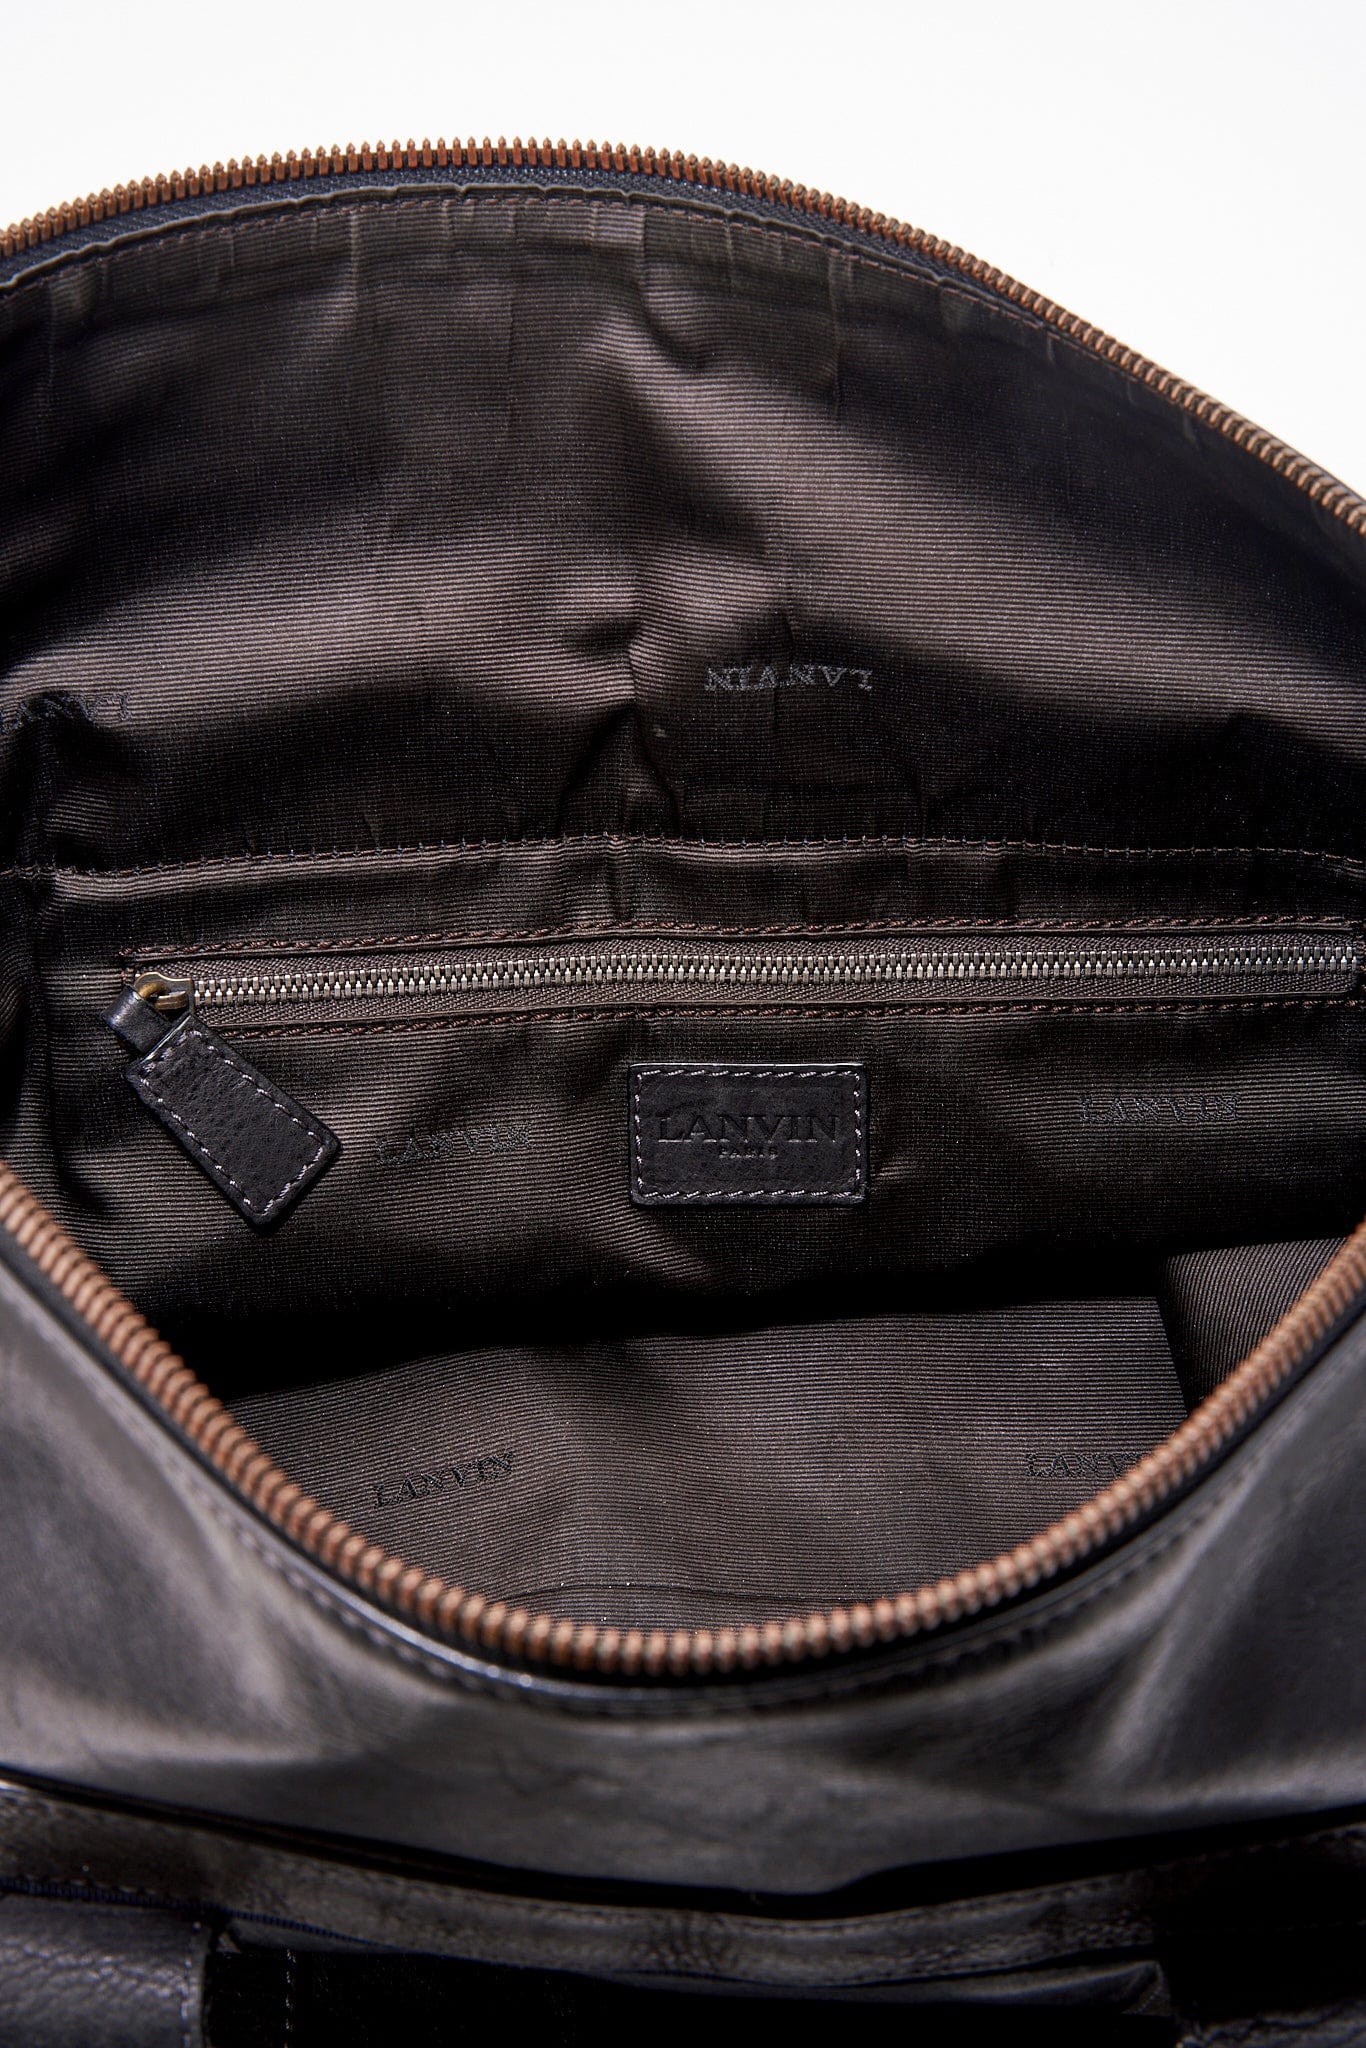 Lanvin Black Leather Tote Bag